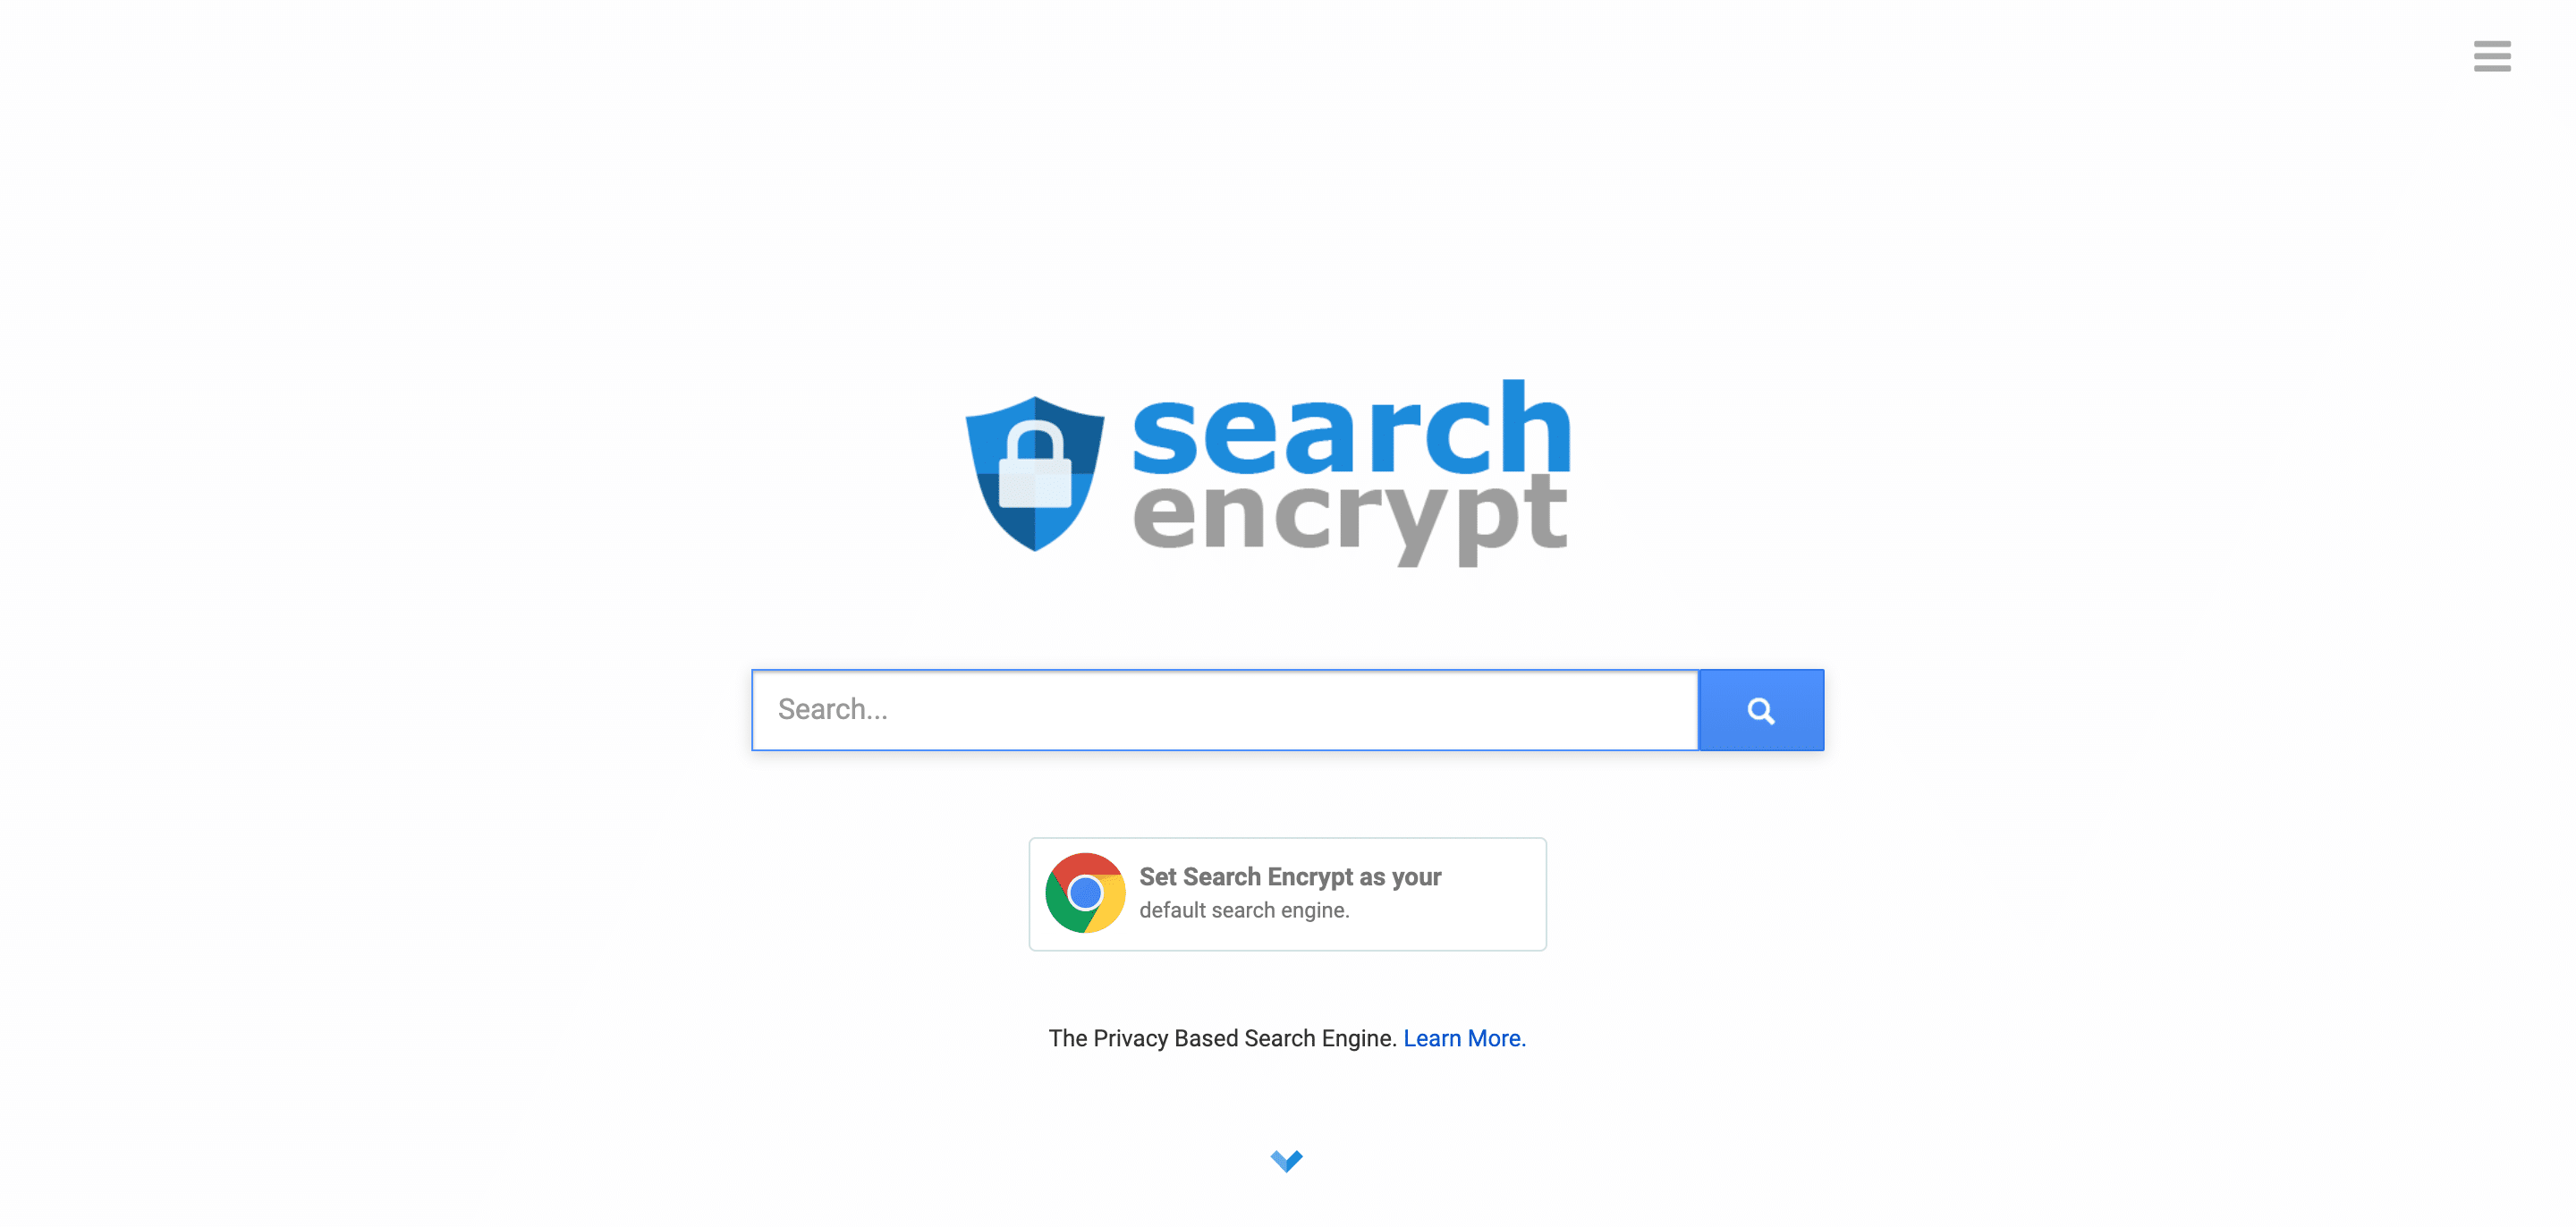 Search encrypt search engine